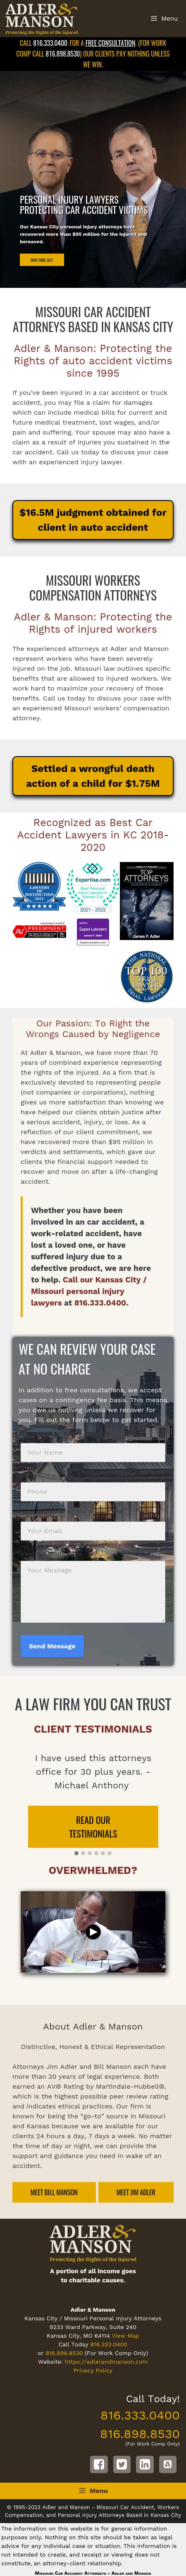 Adler & Manson - Kansas City MO Lawyers